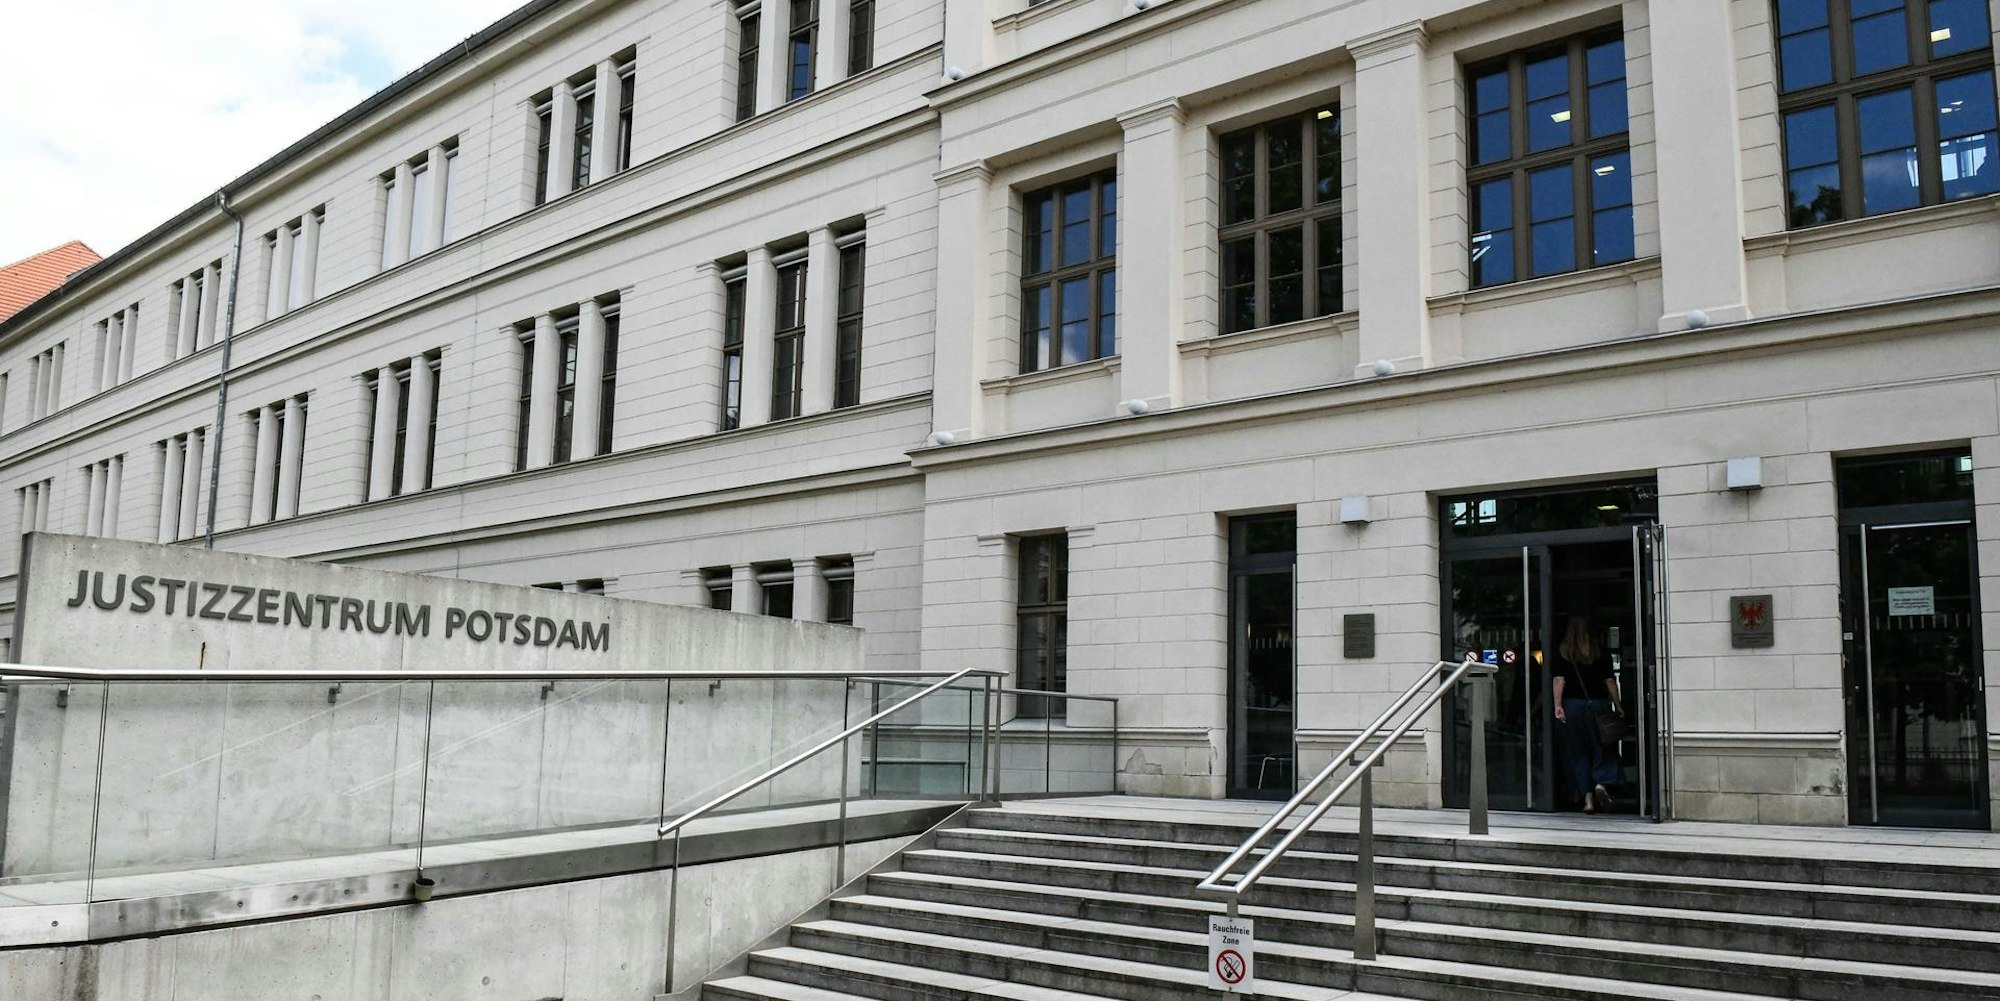 Justizzentrum Potsdam